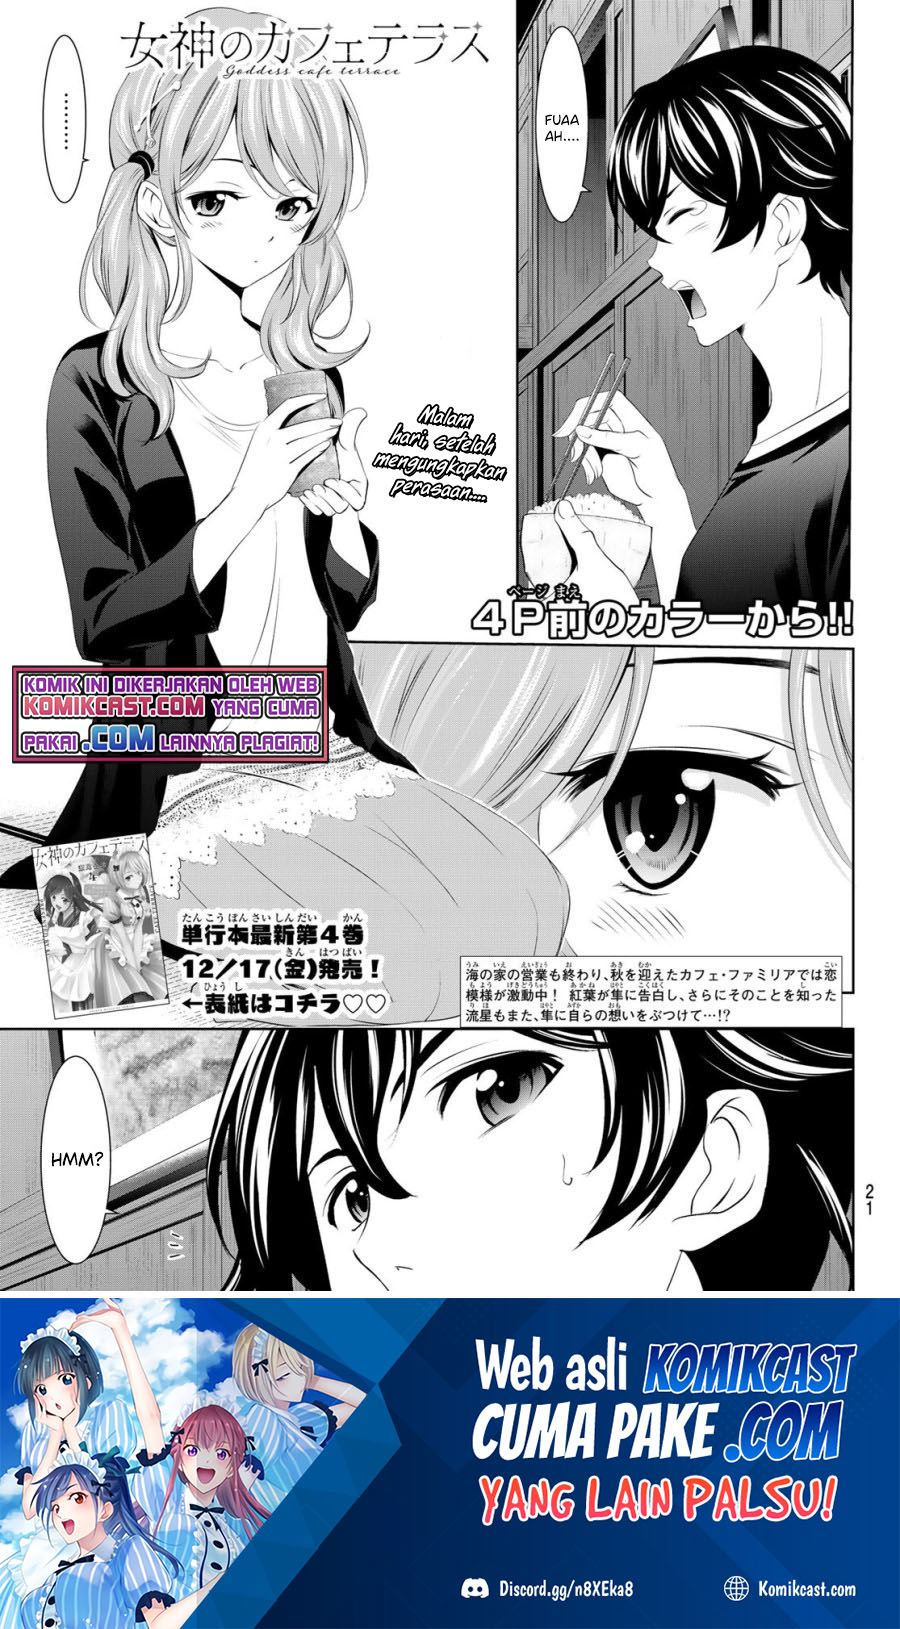 Megami no Kafeterasu (Goddess Café Terrace) Chapter 39